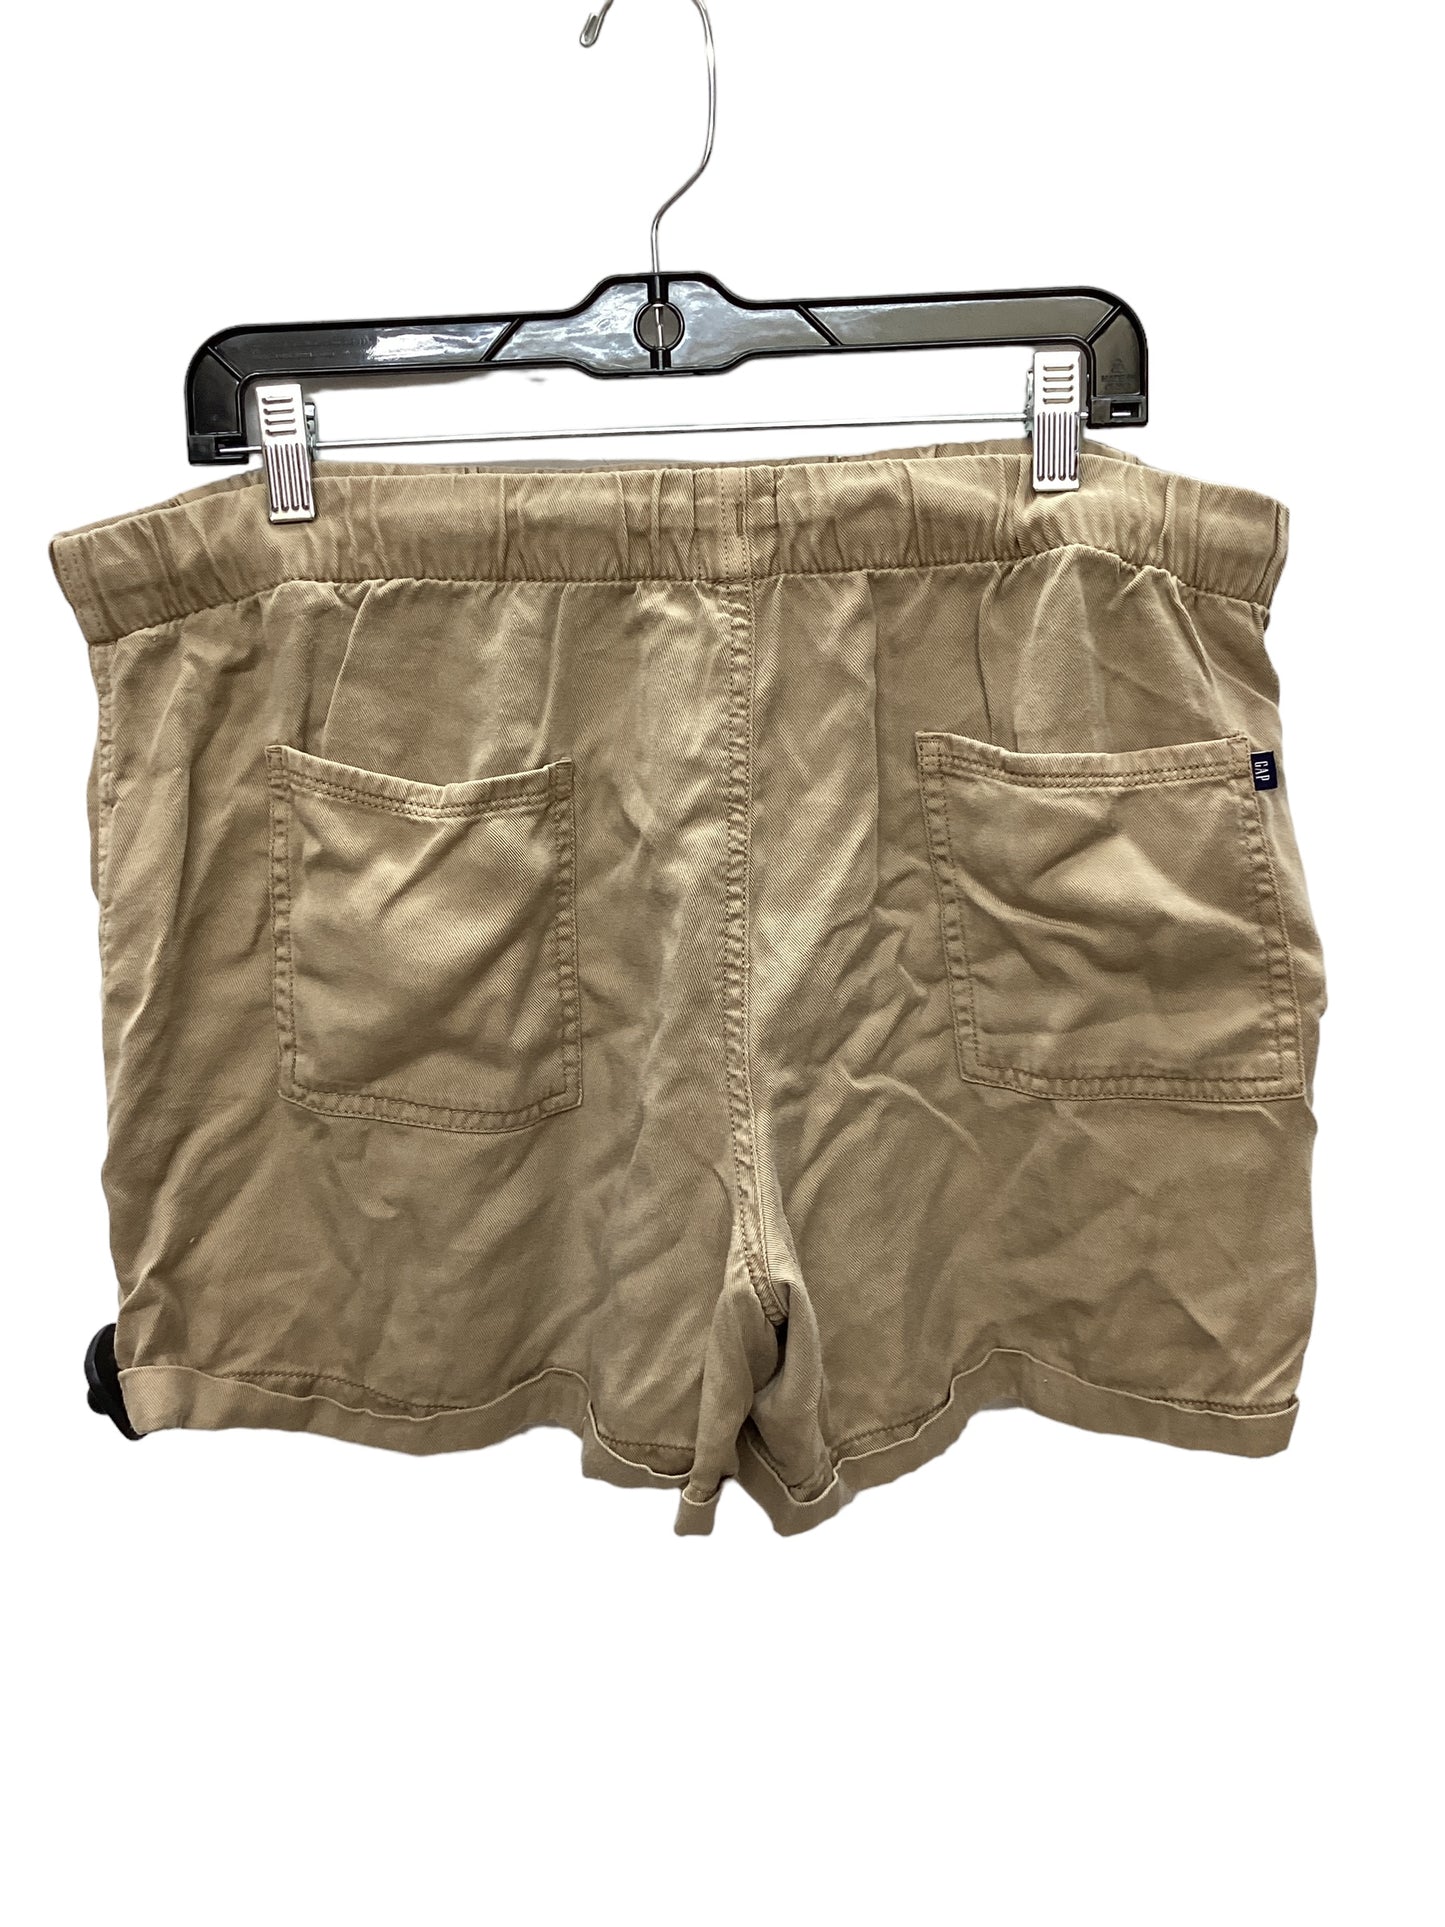 Shorts By Gap  Size: L